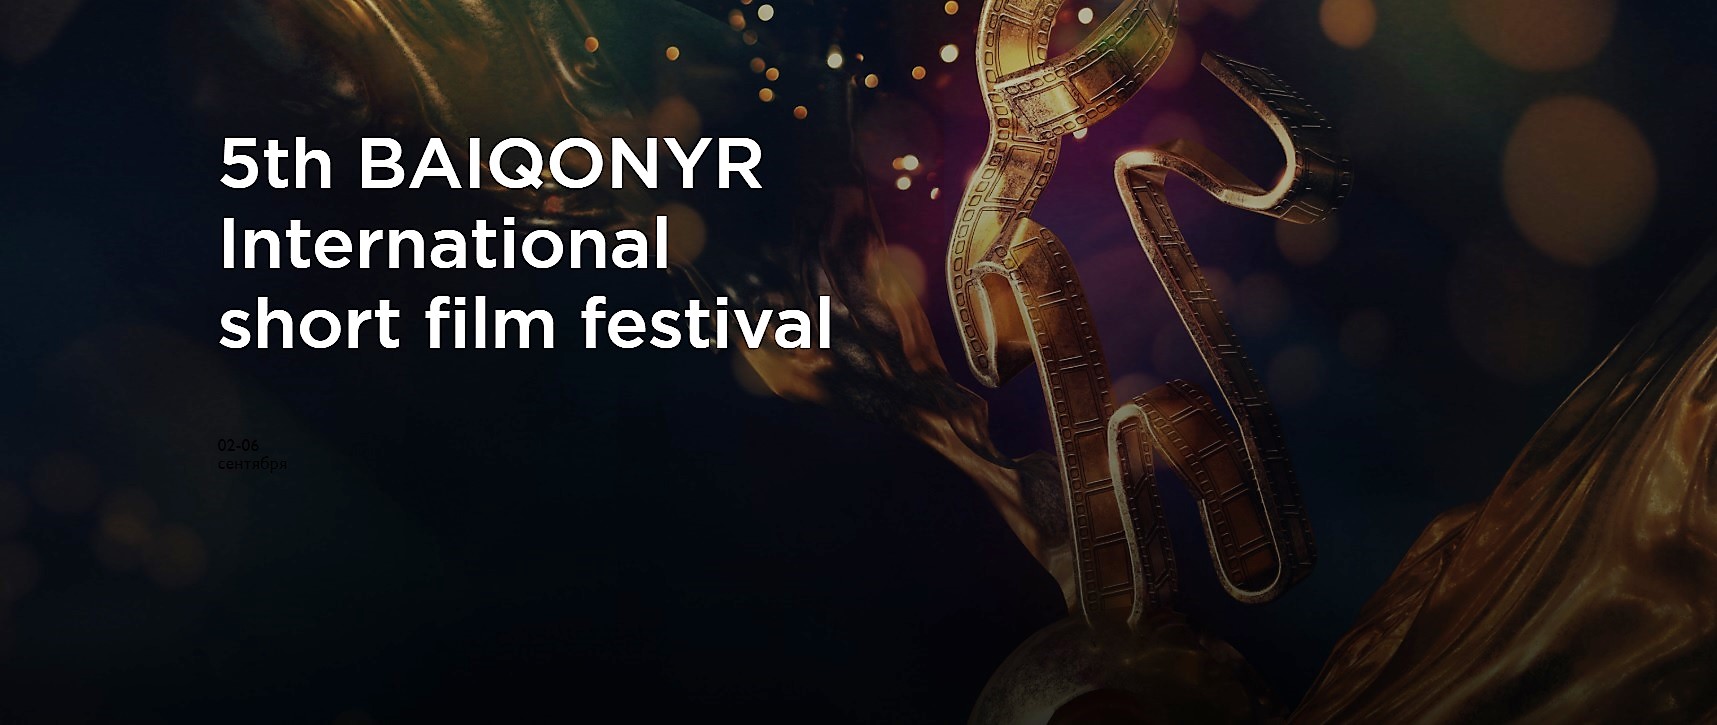 Перенесены даты проведения V BAIQONYR International short film festival